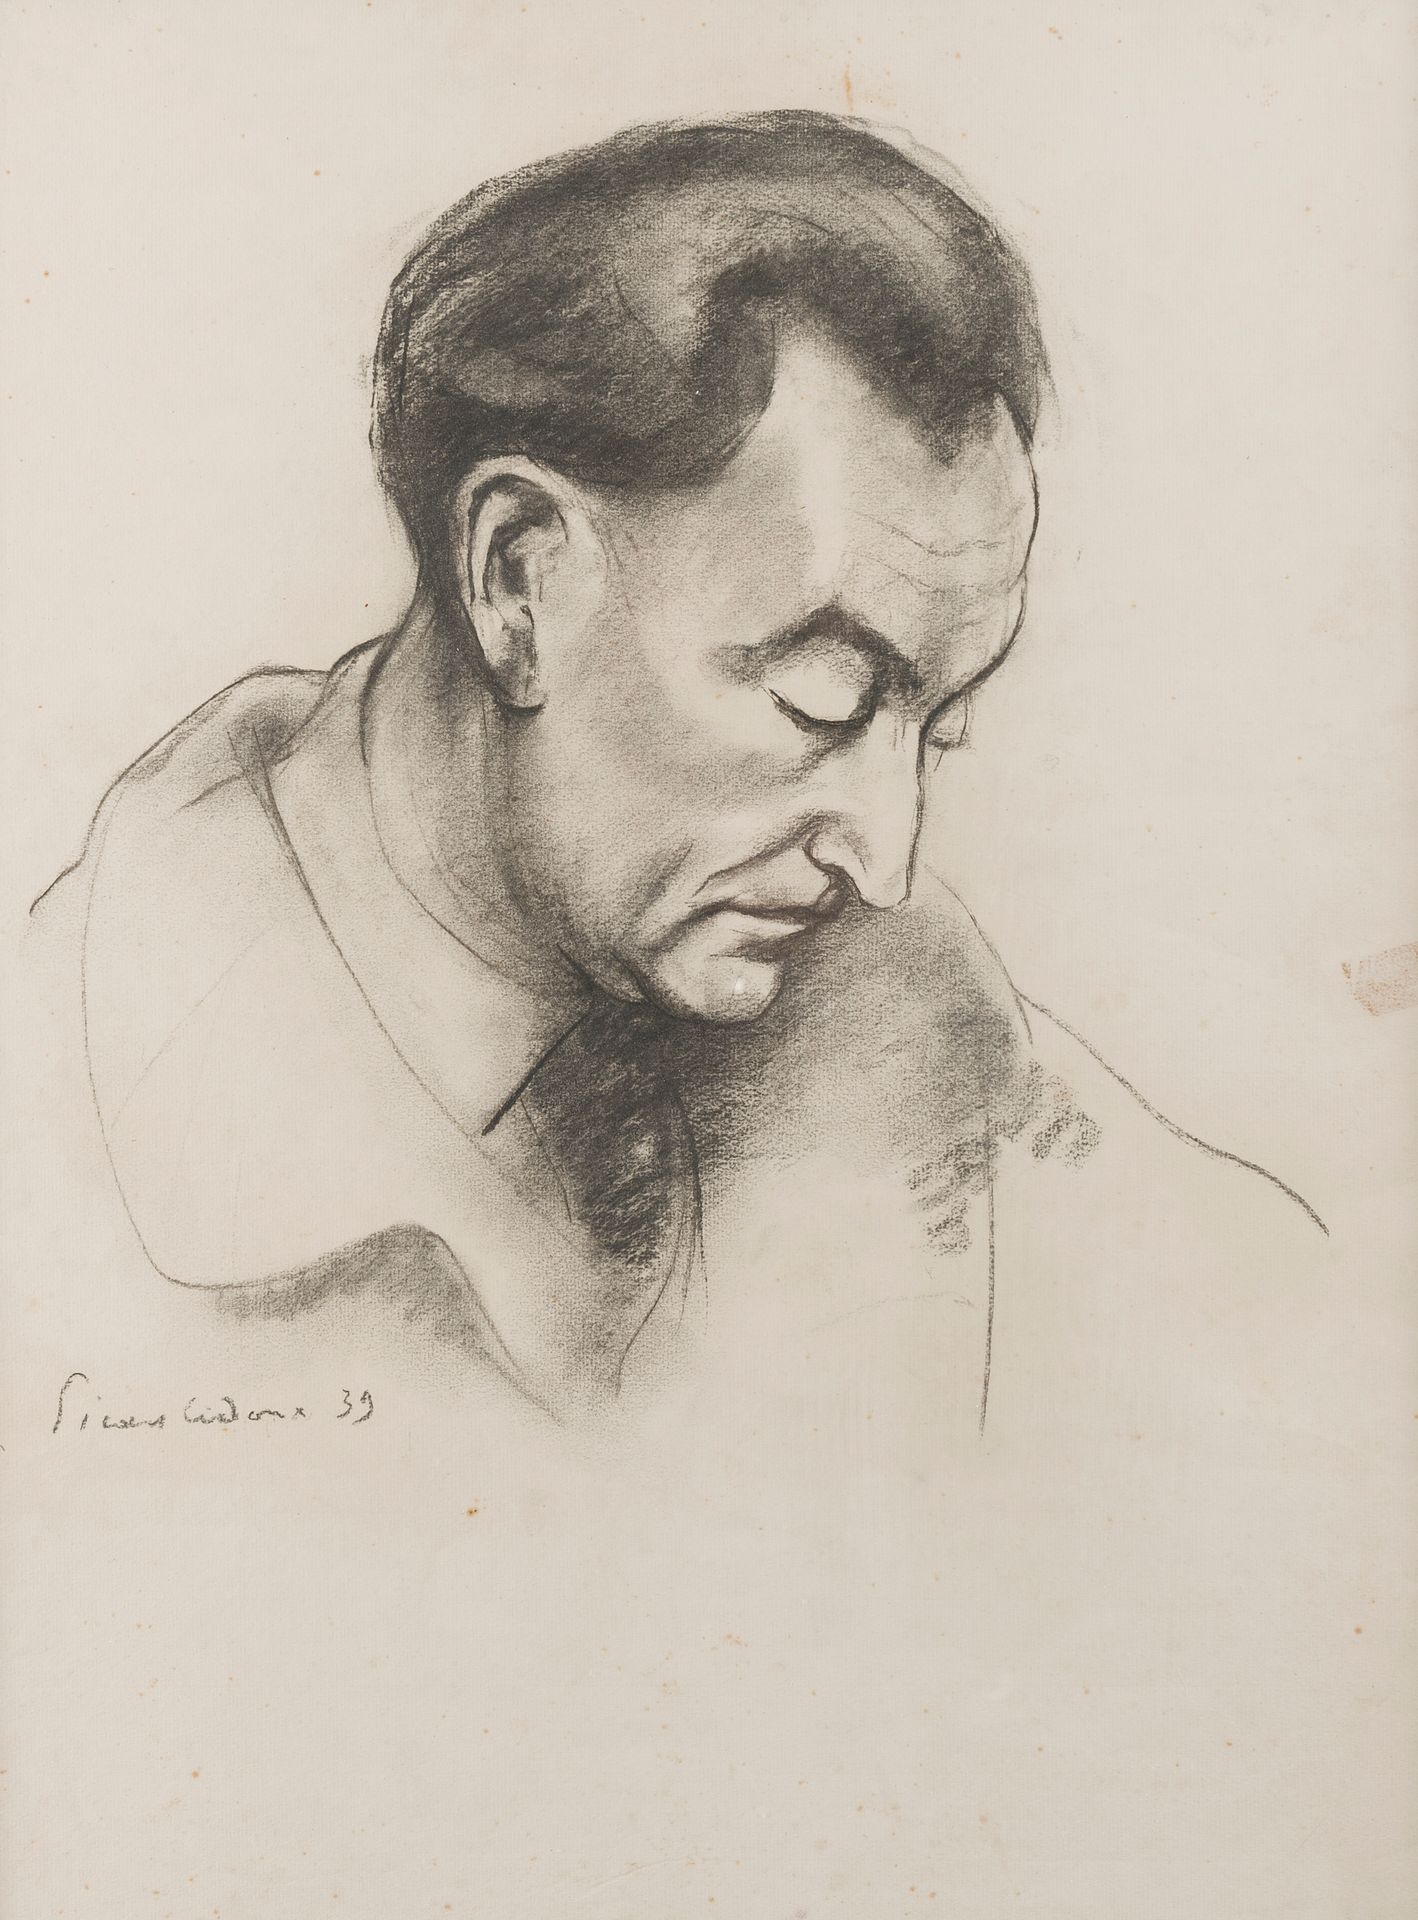 Null 夏尔-皮卡特-勒杜(1881-1959)
儒勒-罗曼斯的画像，1939年
炭笔画
左侧有签名
62 x 47厘米